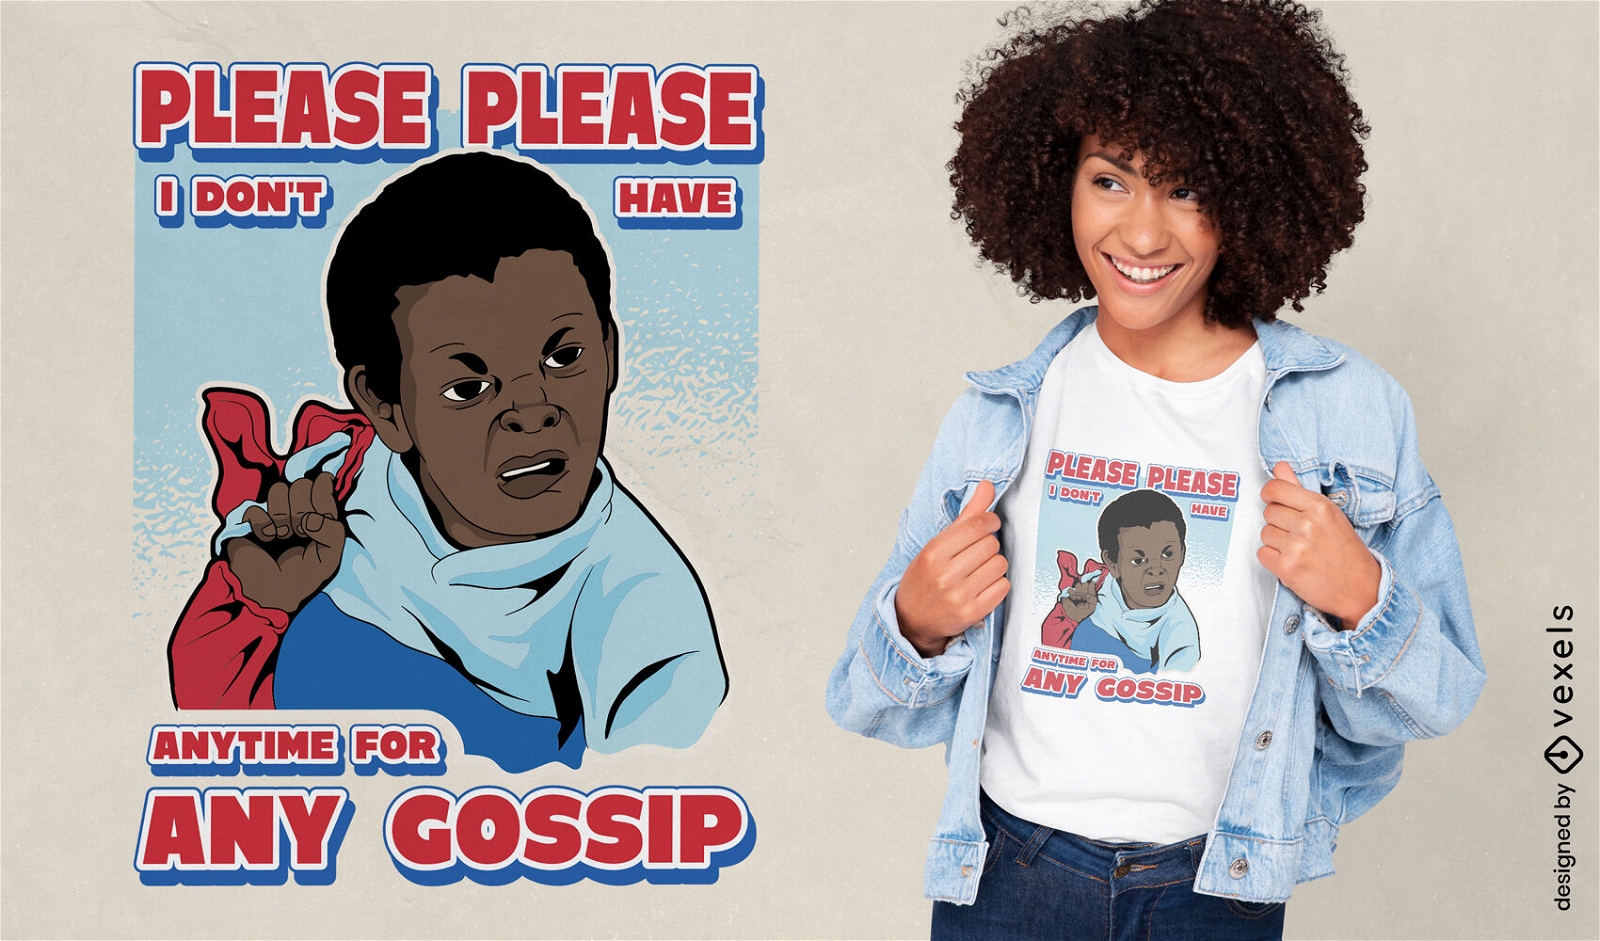 Gossip child meme parody t-shirt design